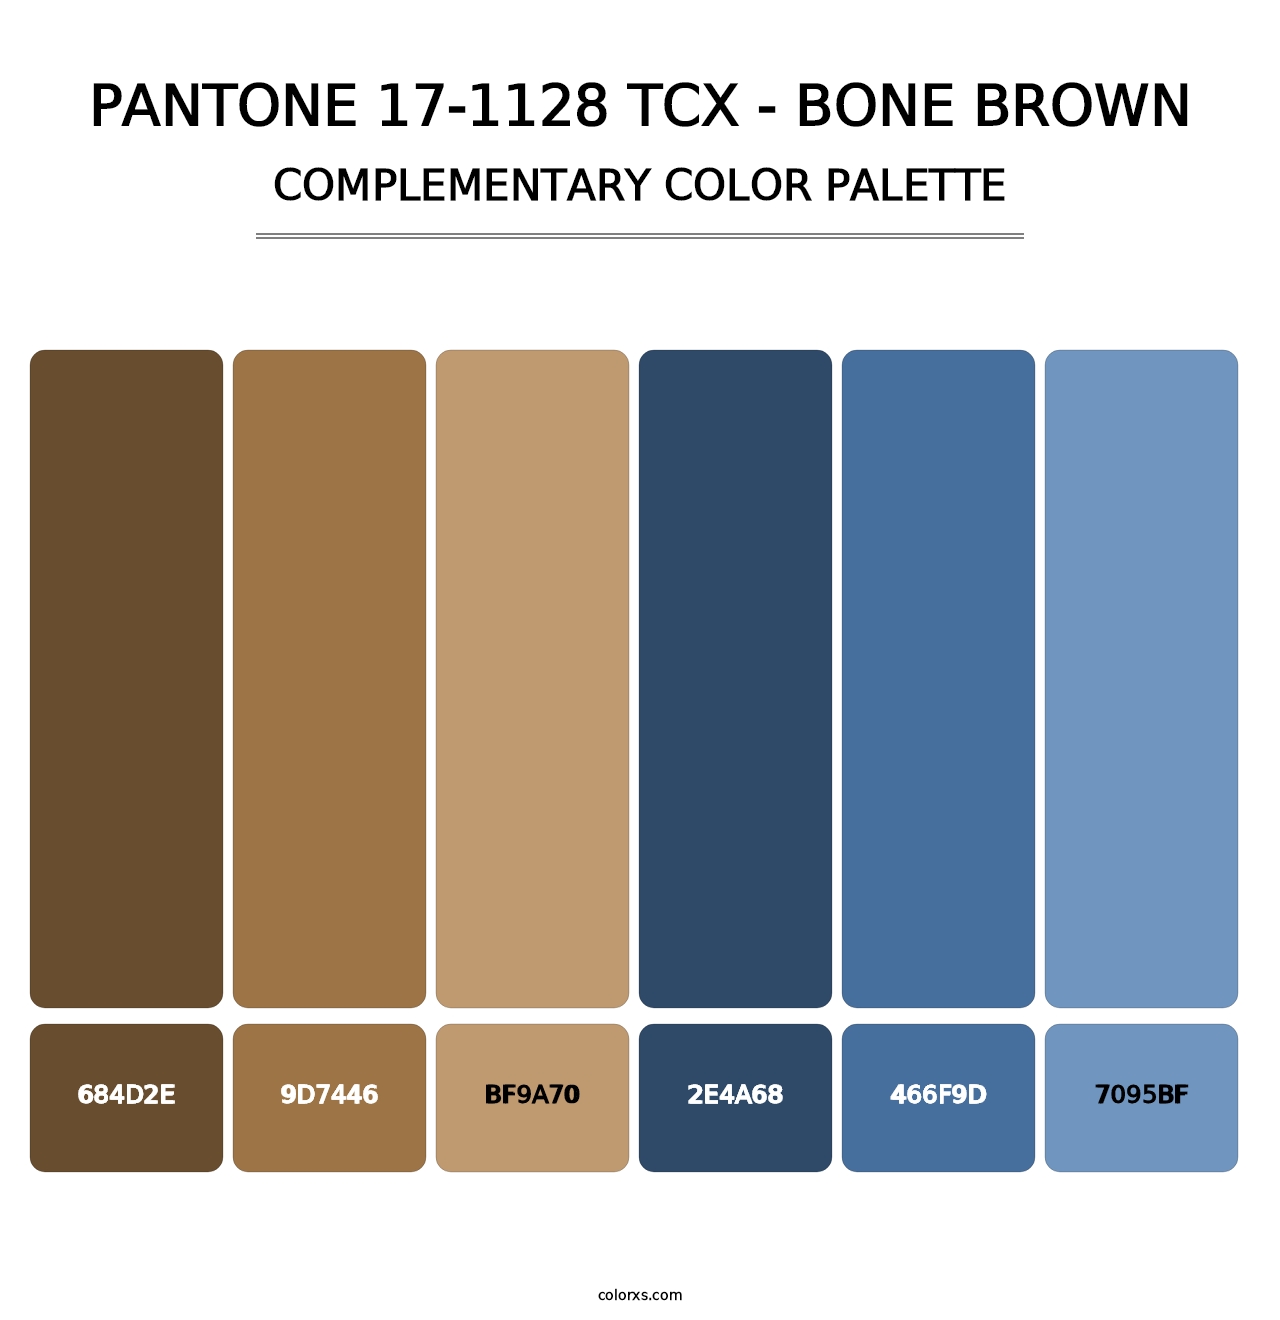 PANTONE 17-1128 TCX - Bone Brown - Complementary Color Palette